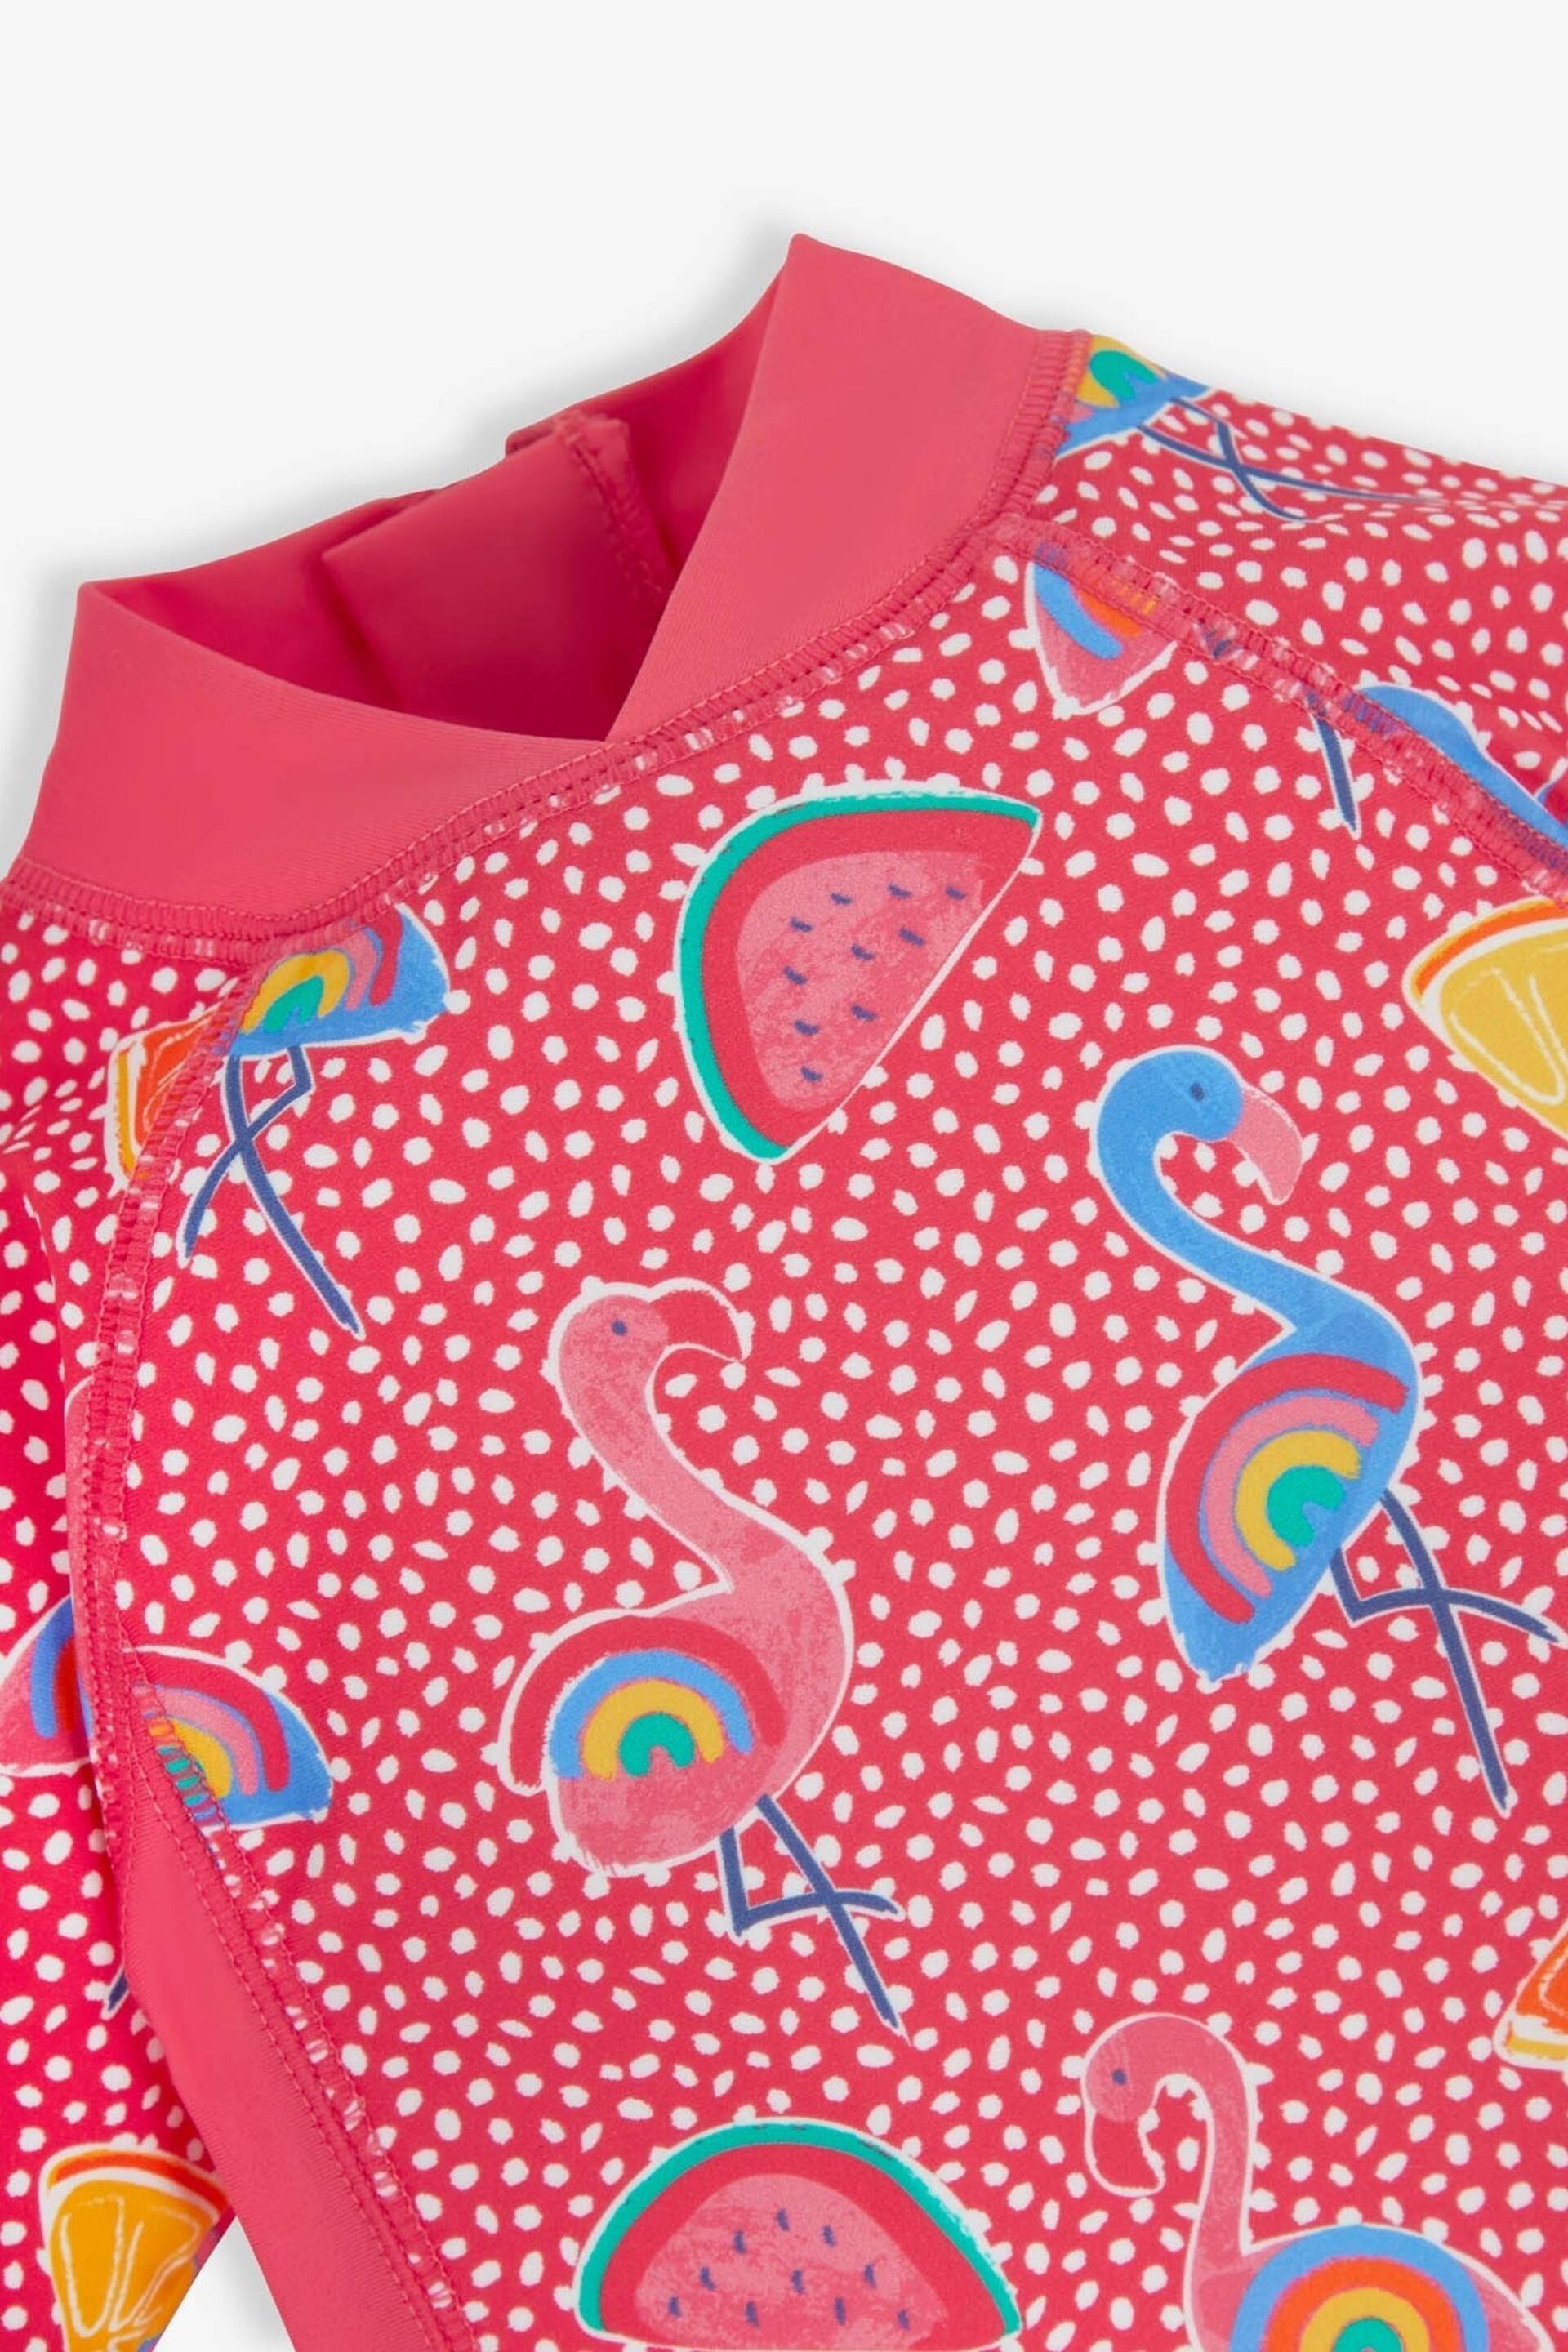 JoJo Maman Bébé Flamingo UPF 50 1-Piece Sun Protection Suit - Image 2 of 2